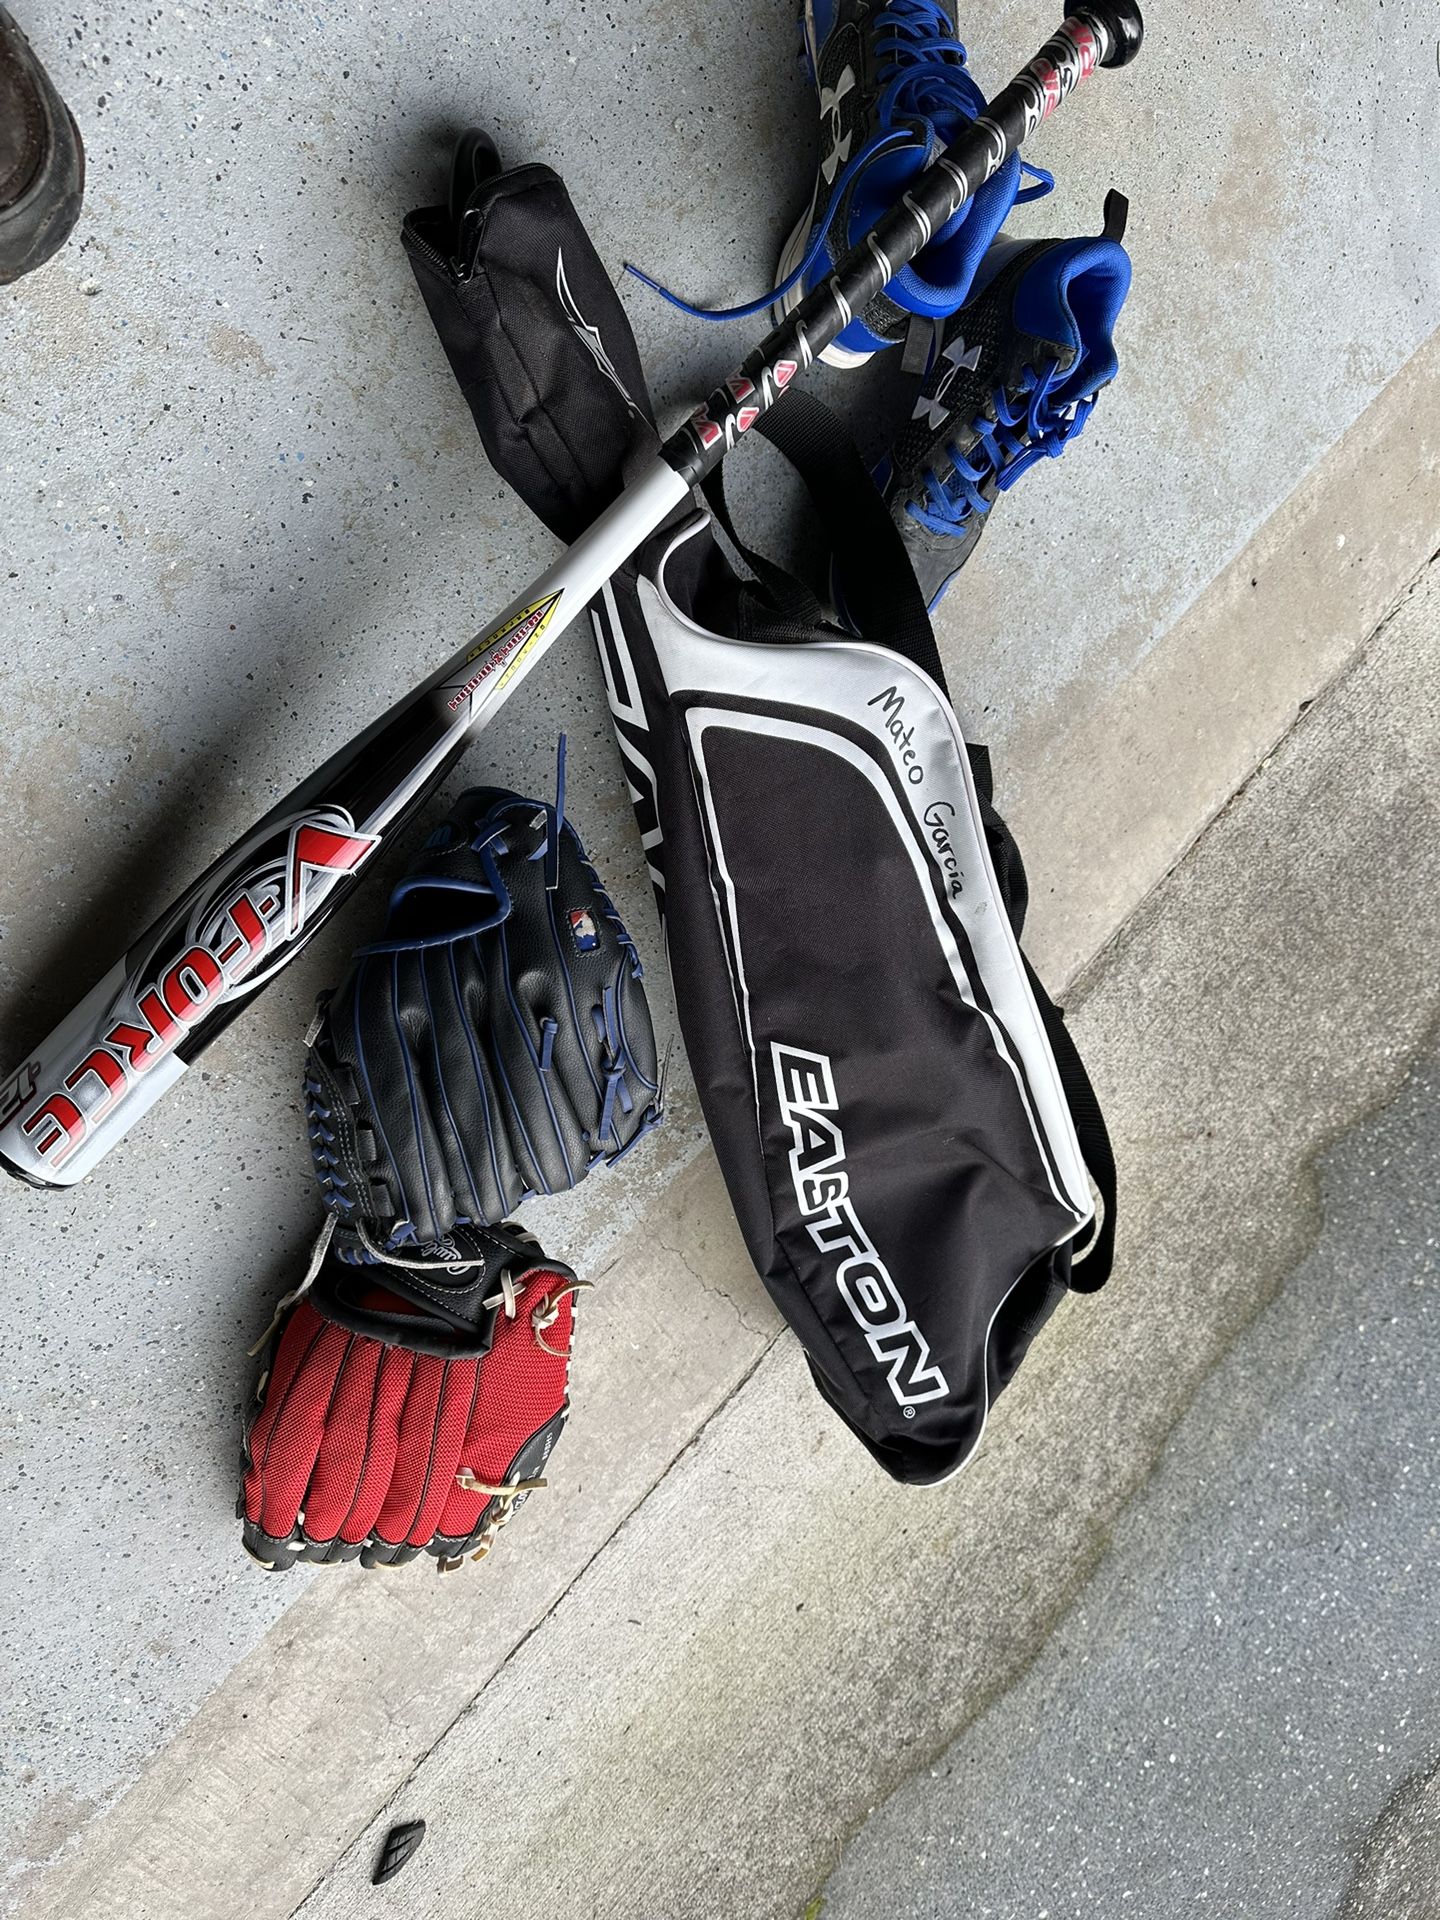 Kids Baseball Gloves, Bat, Cleats and Bag